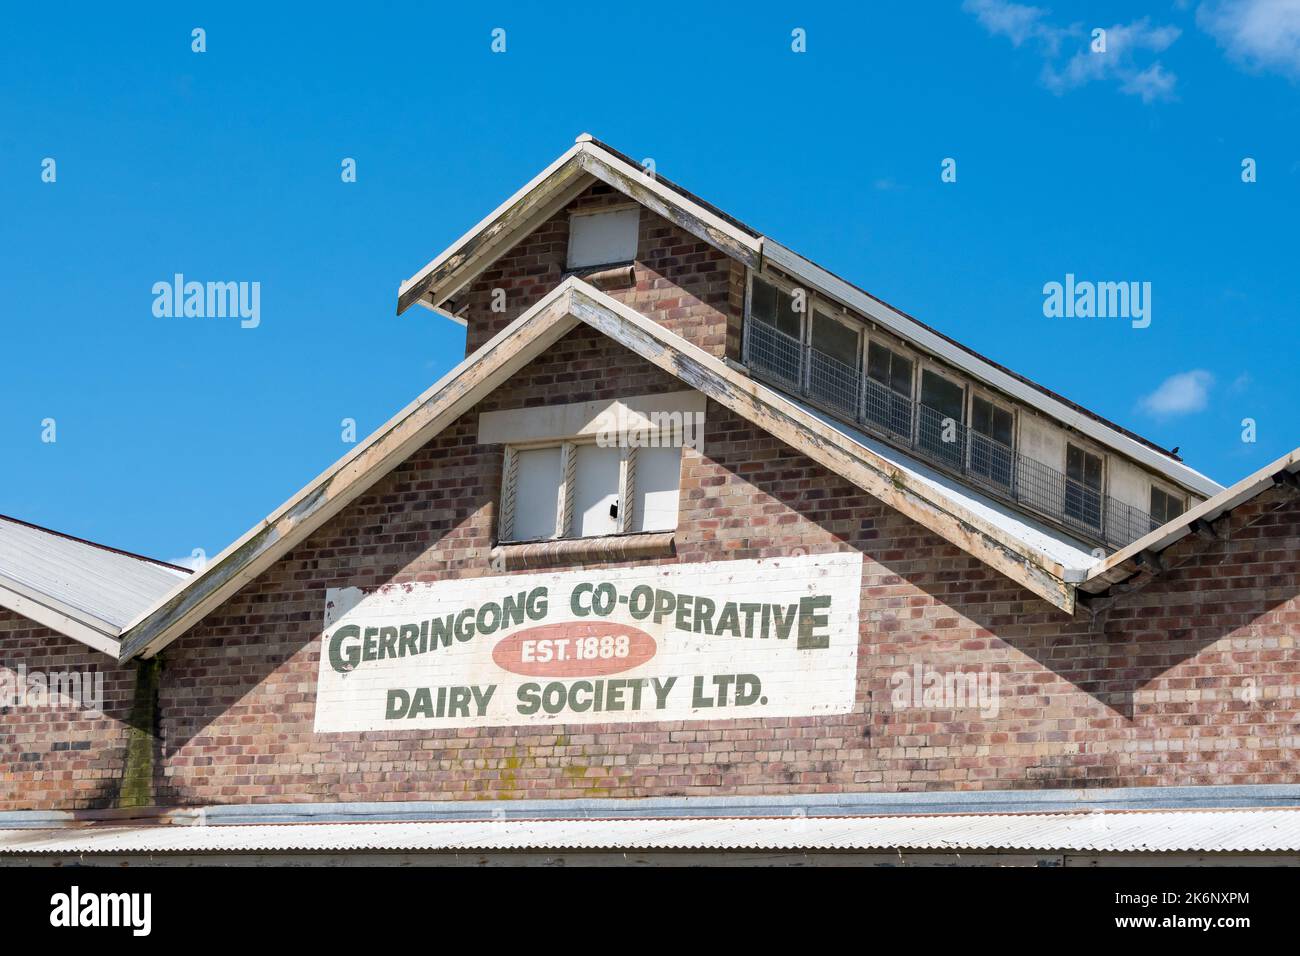 Gerringong milk storage buildings Stock Photo